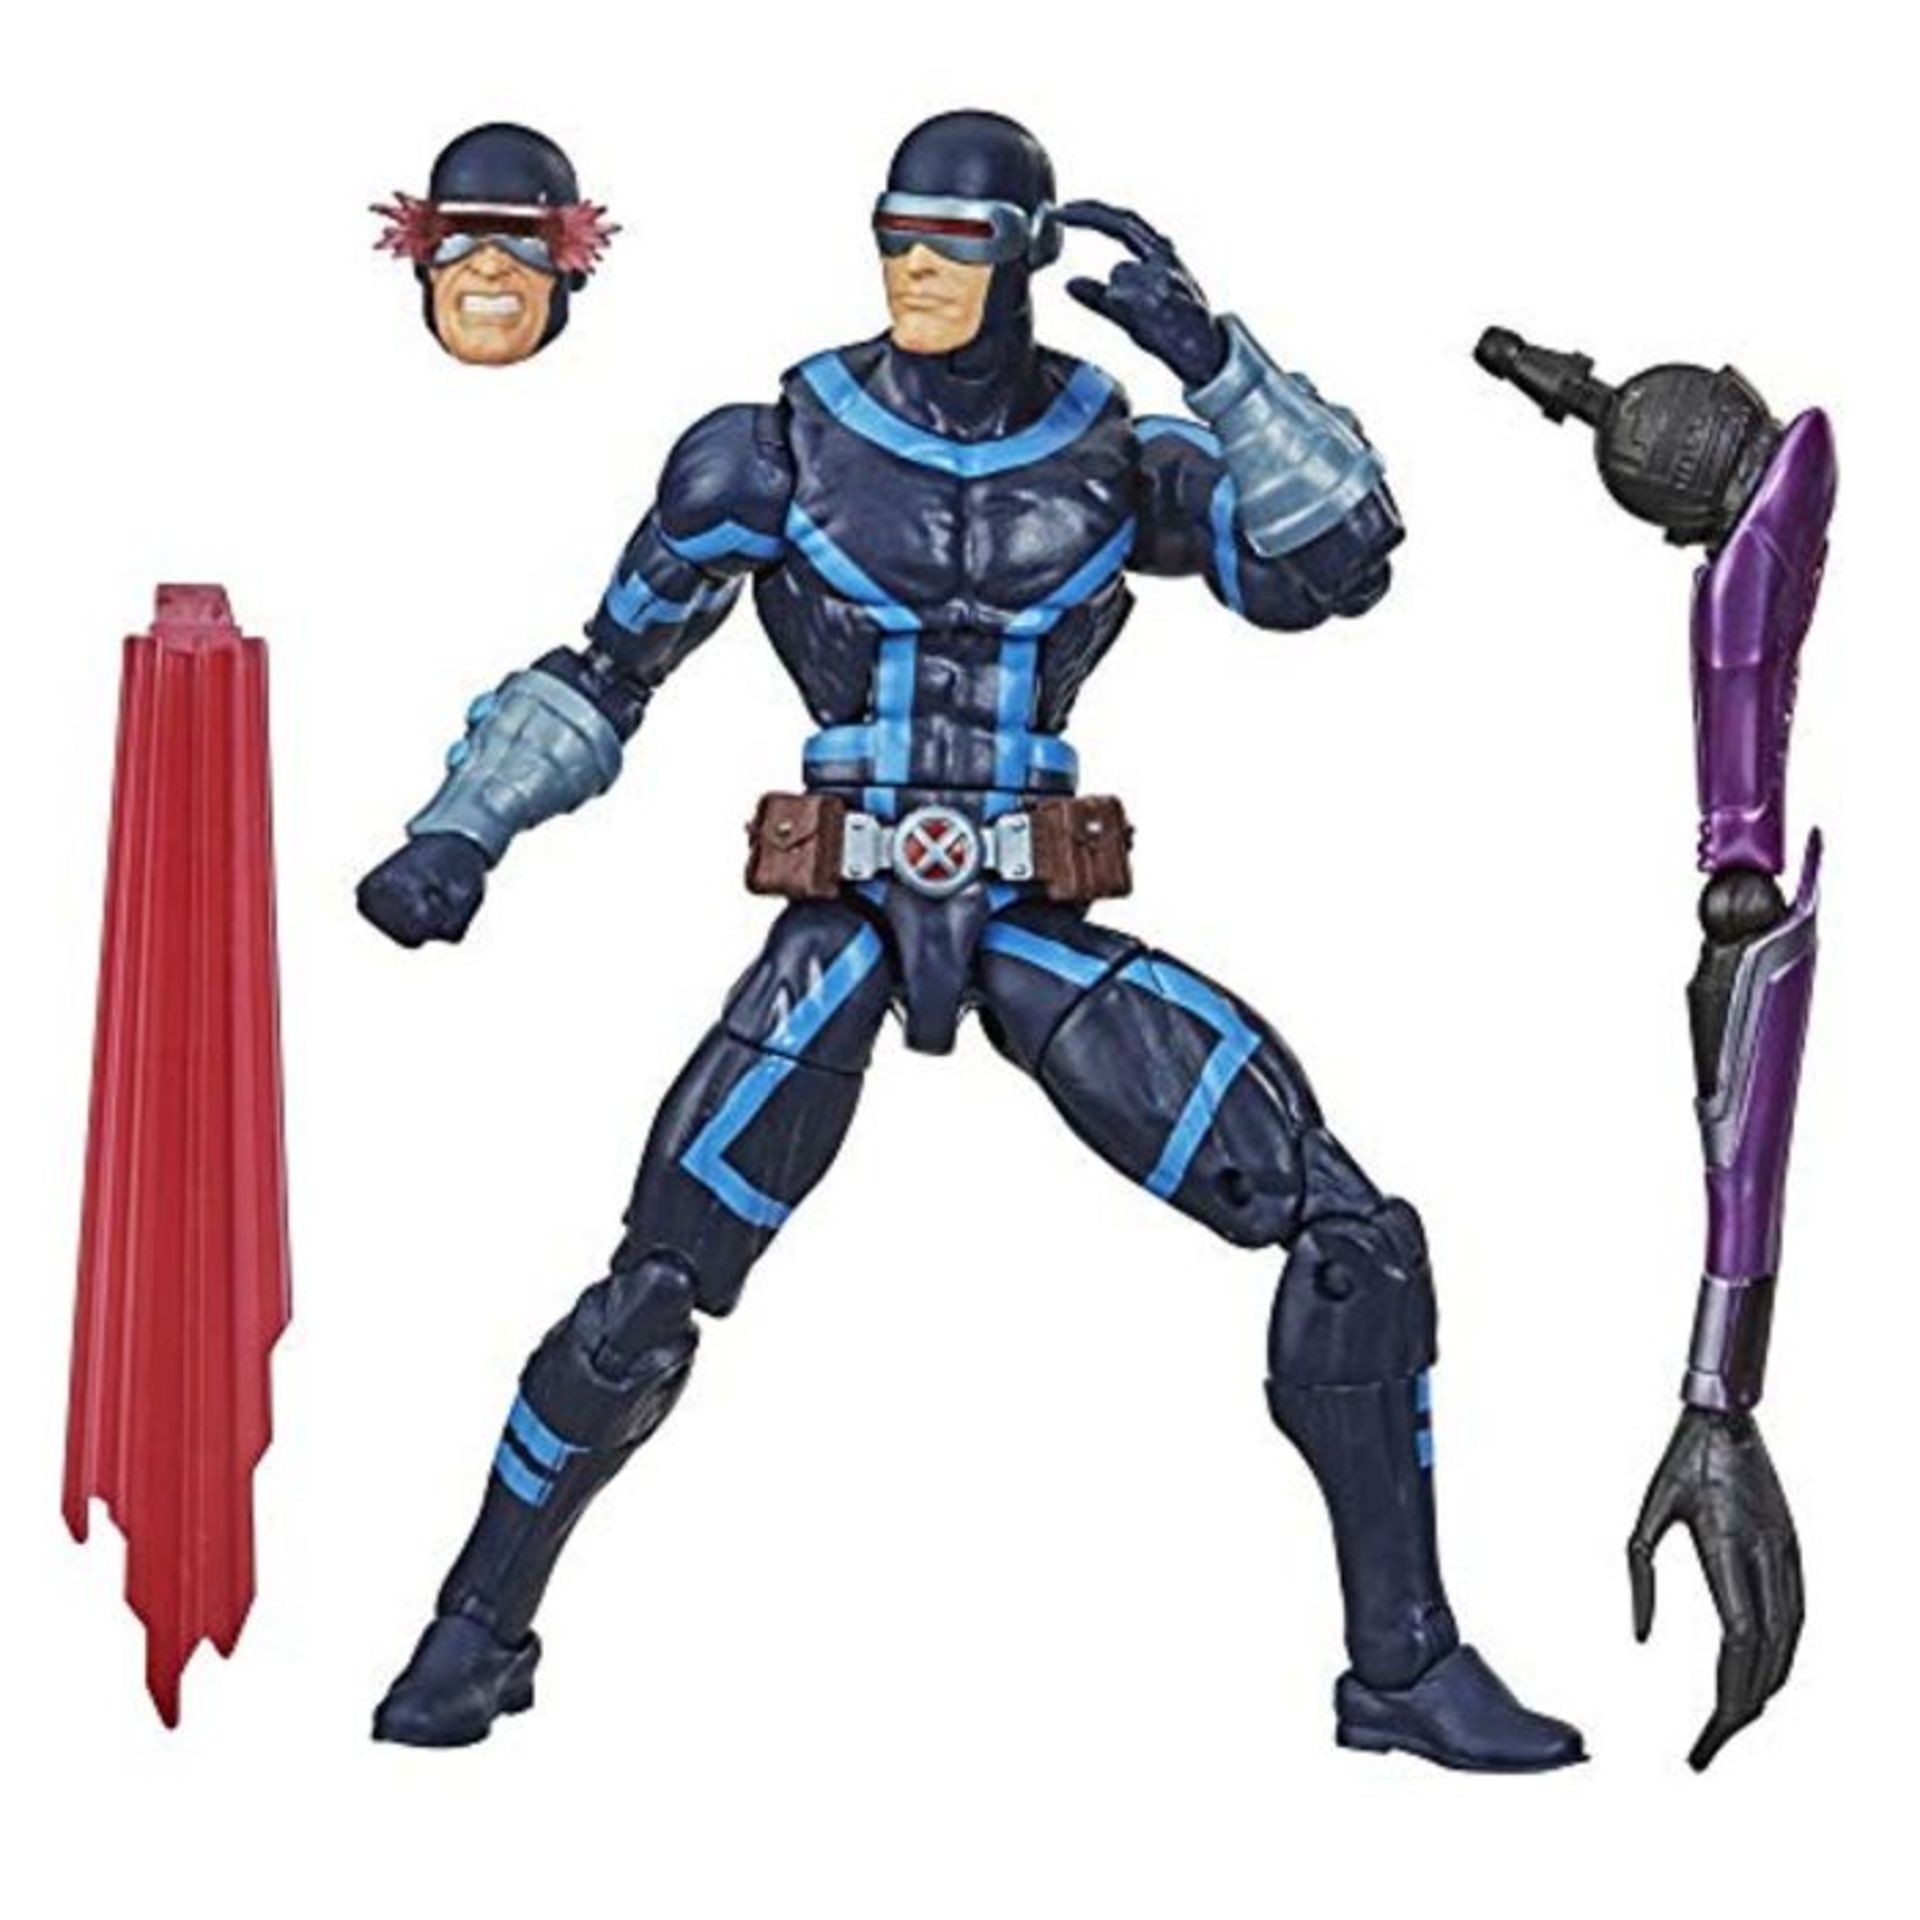 Hasbro Marvel Legends X-Men Series 6-inch Collectible Cyclops Action Figure Toy, Premi